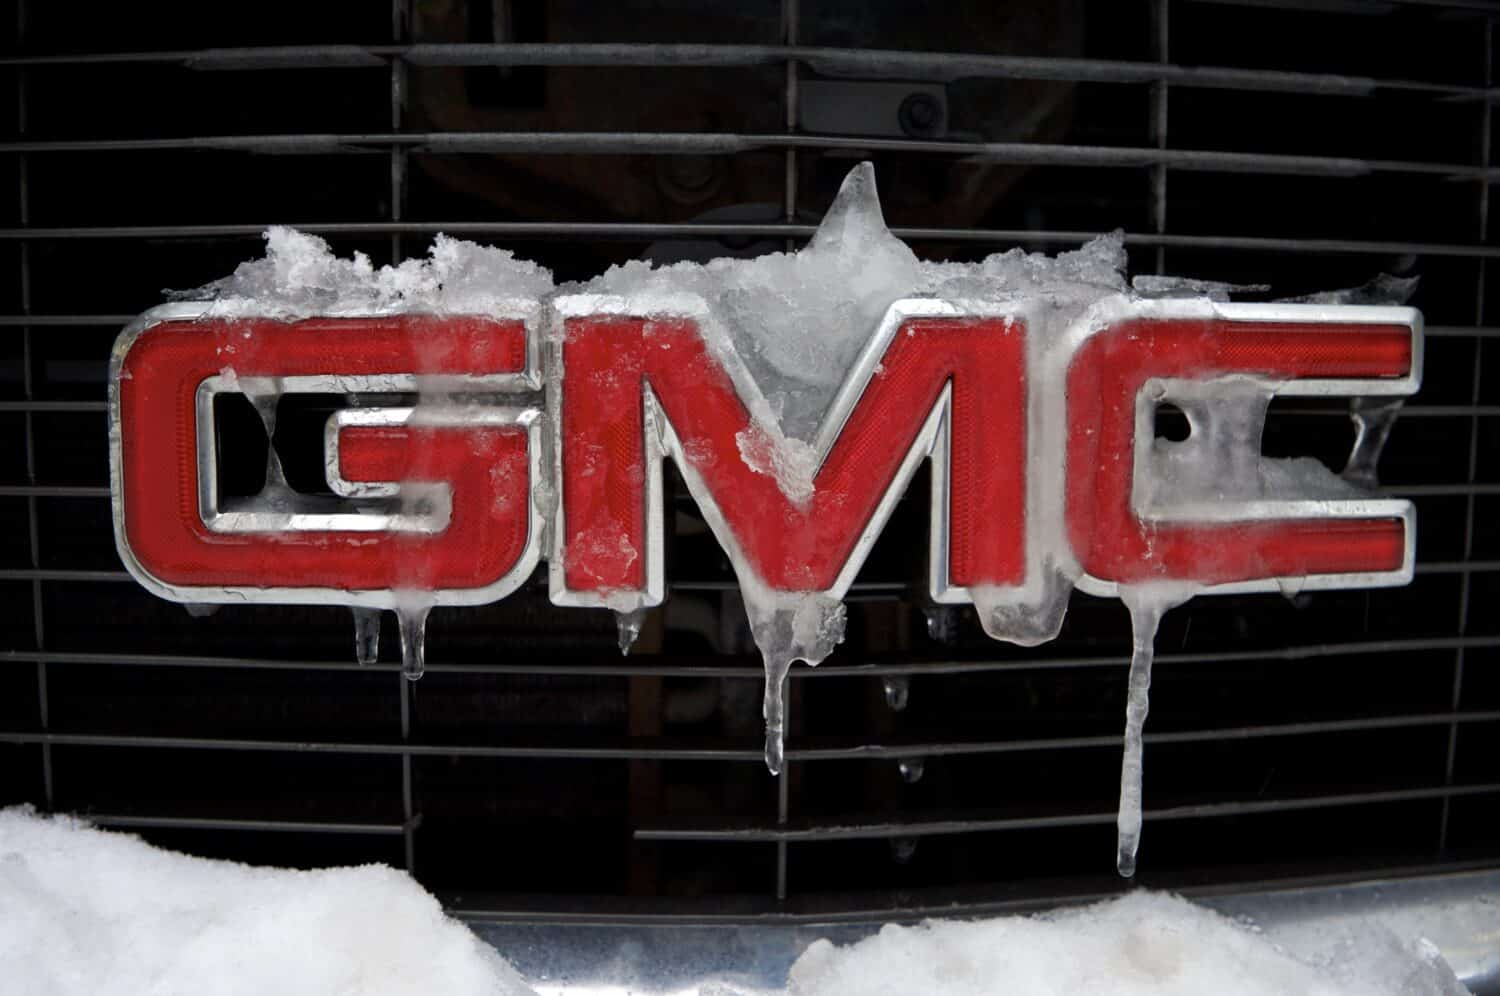 Frozen GMC. Car grill